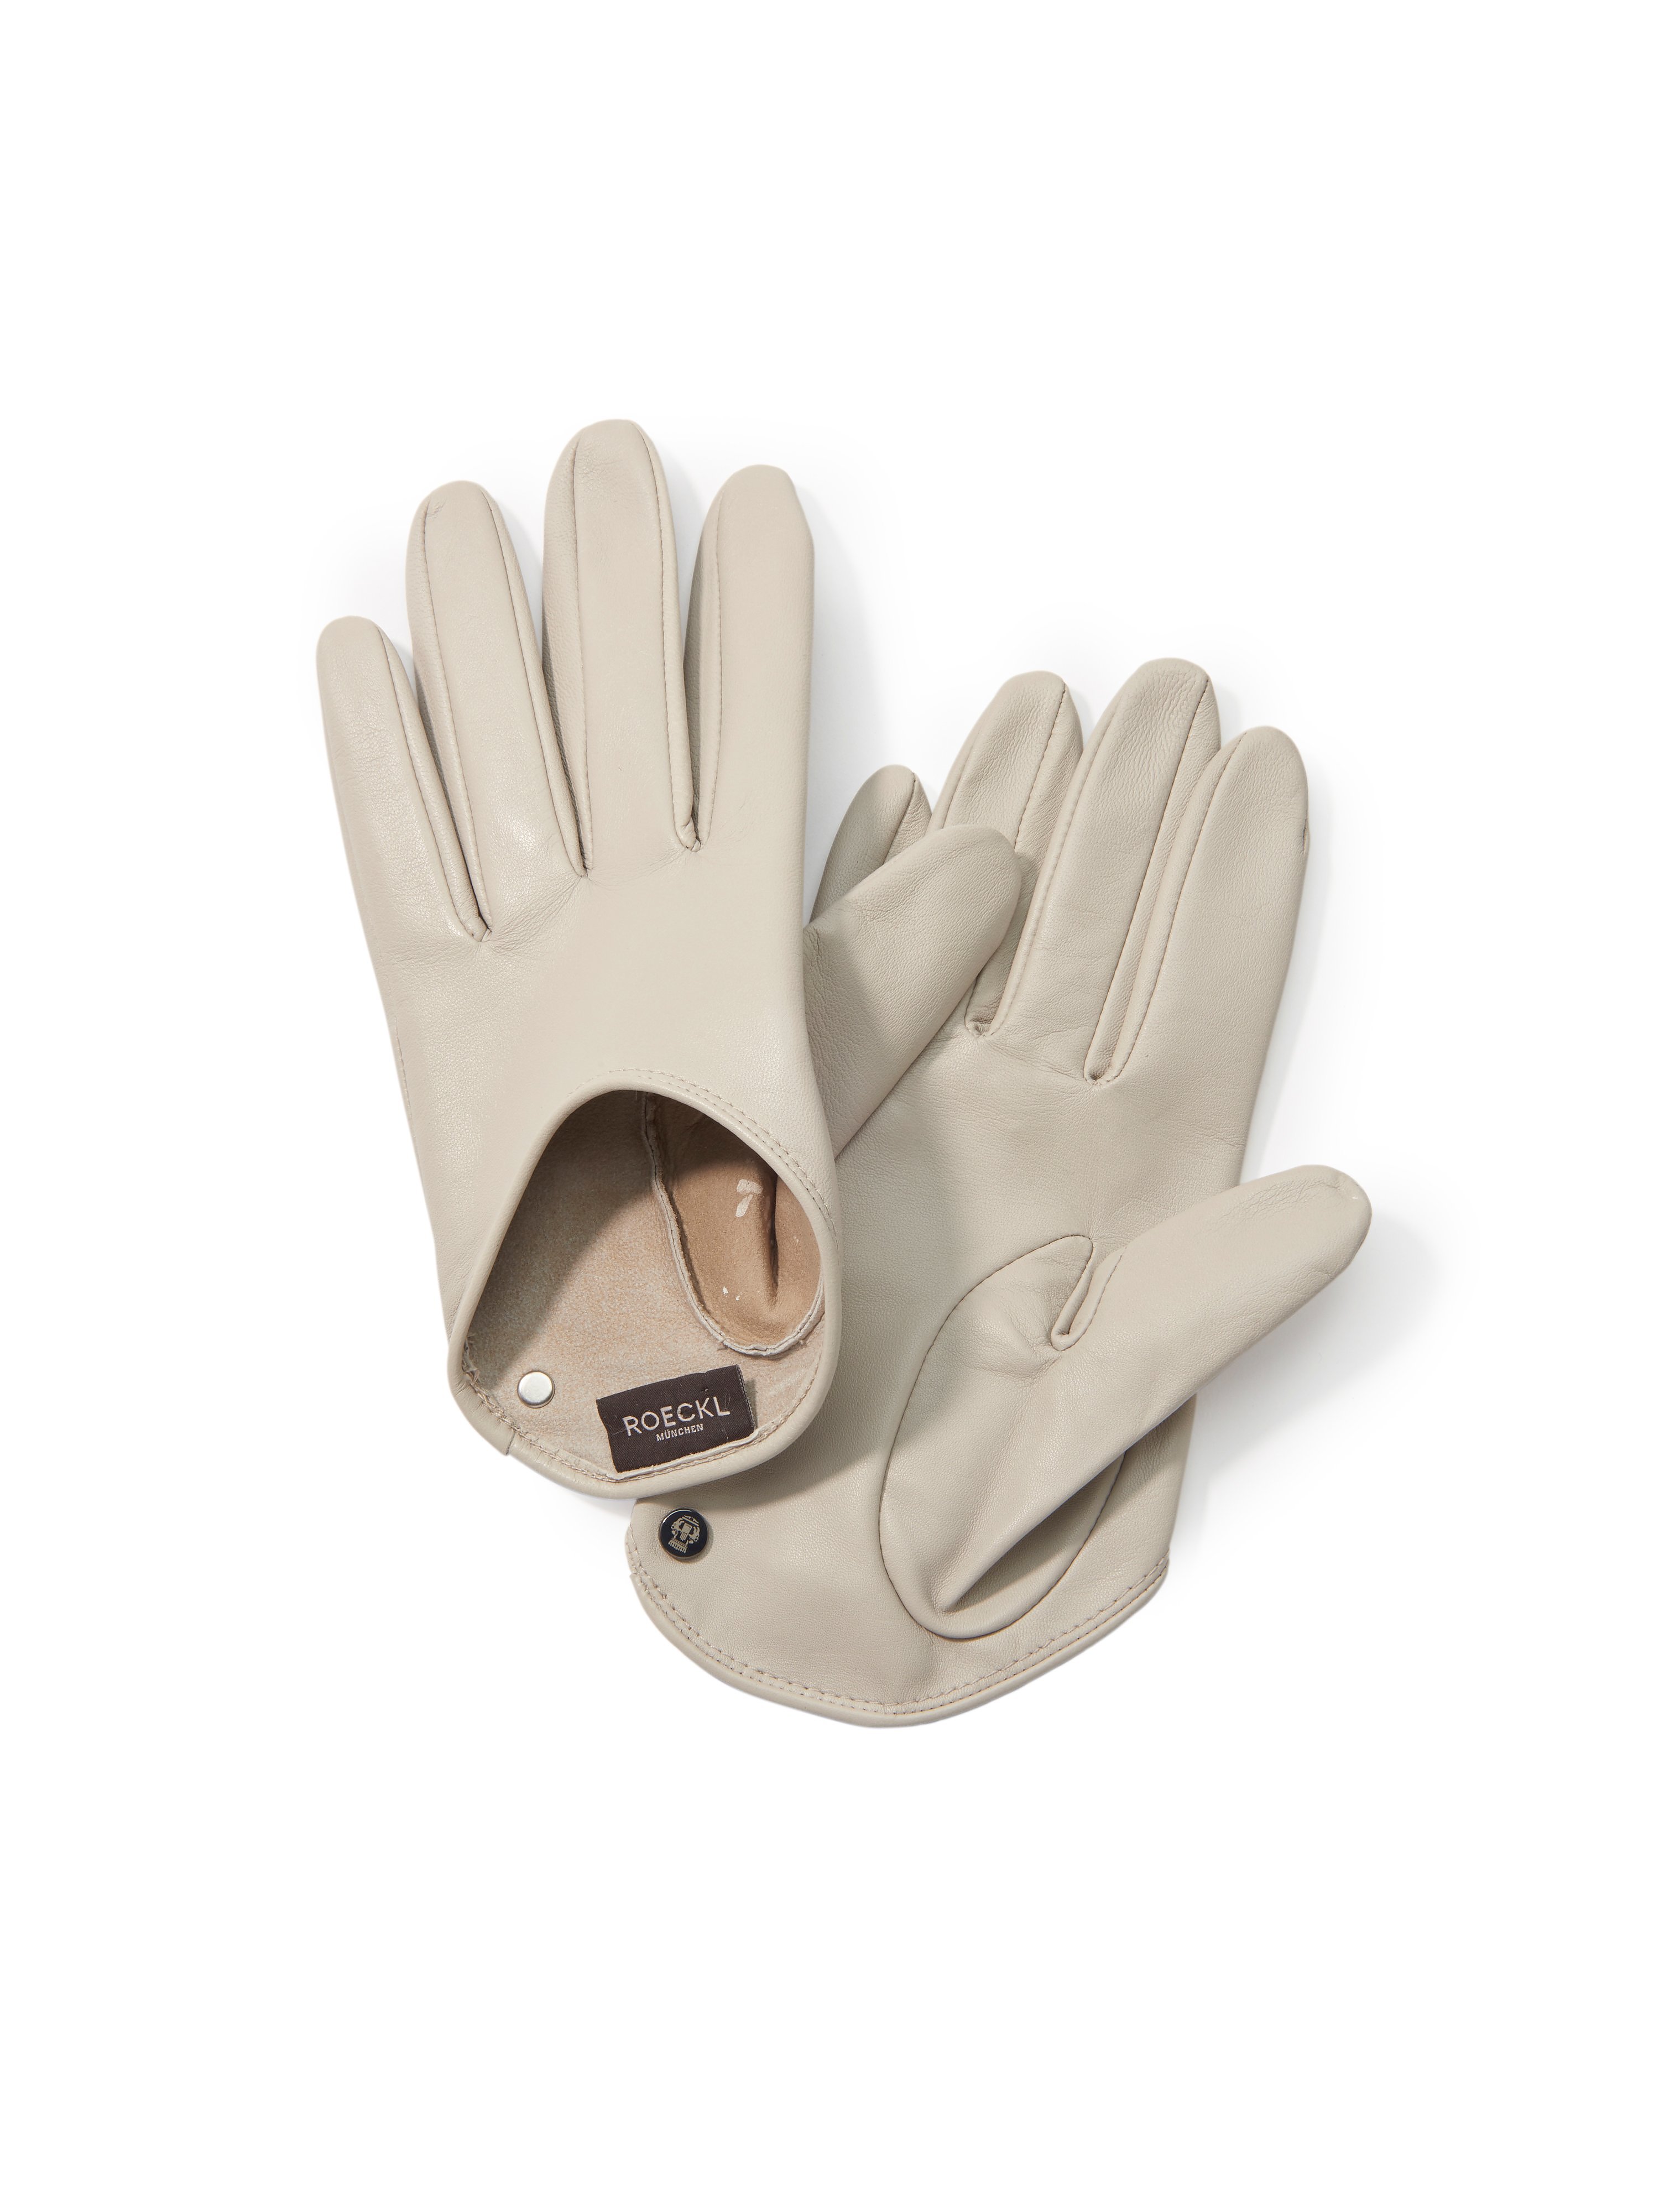 Les gants cuir nappa mouton  Roeckl beige taille 8